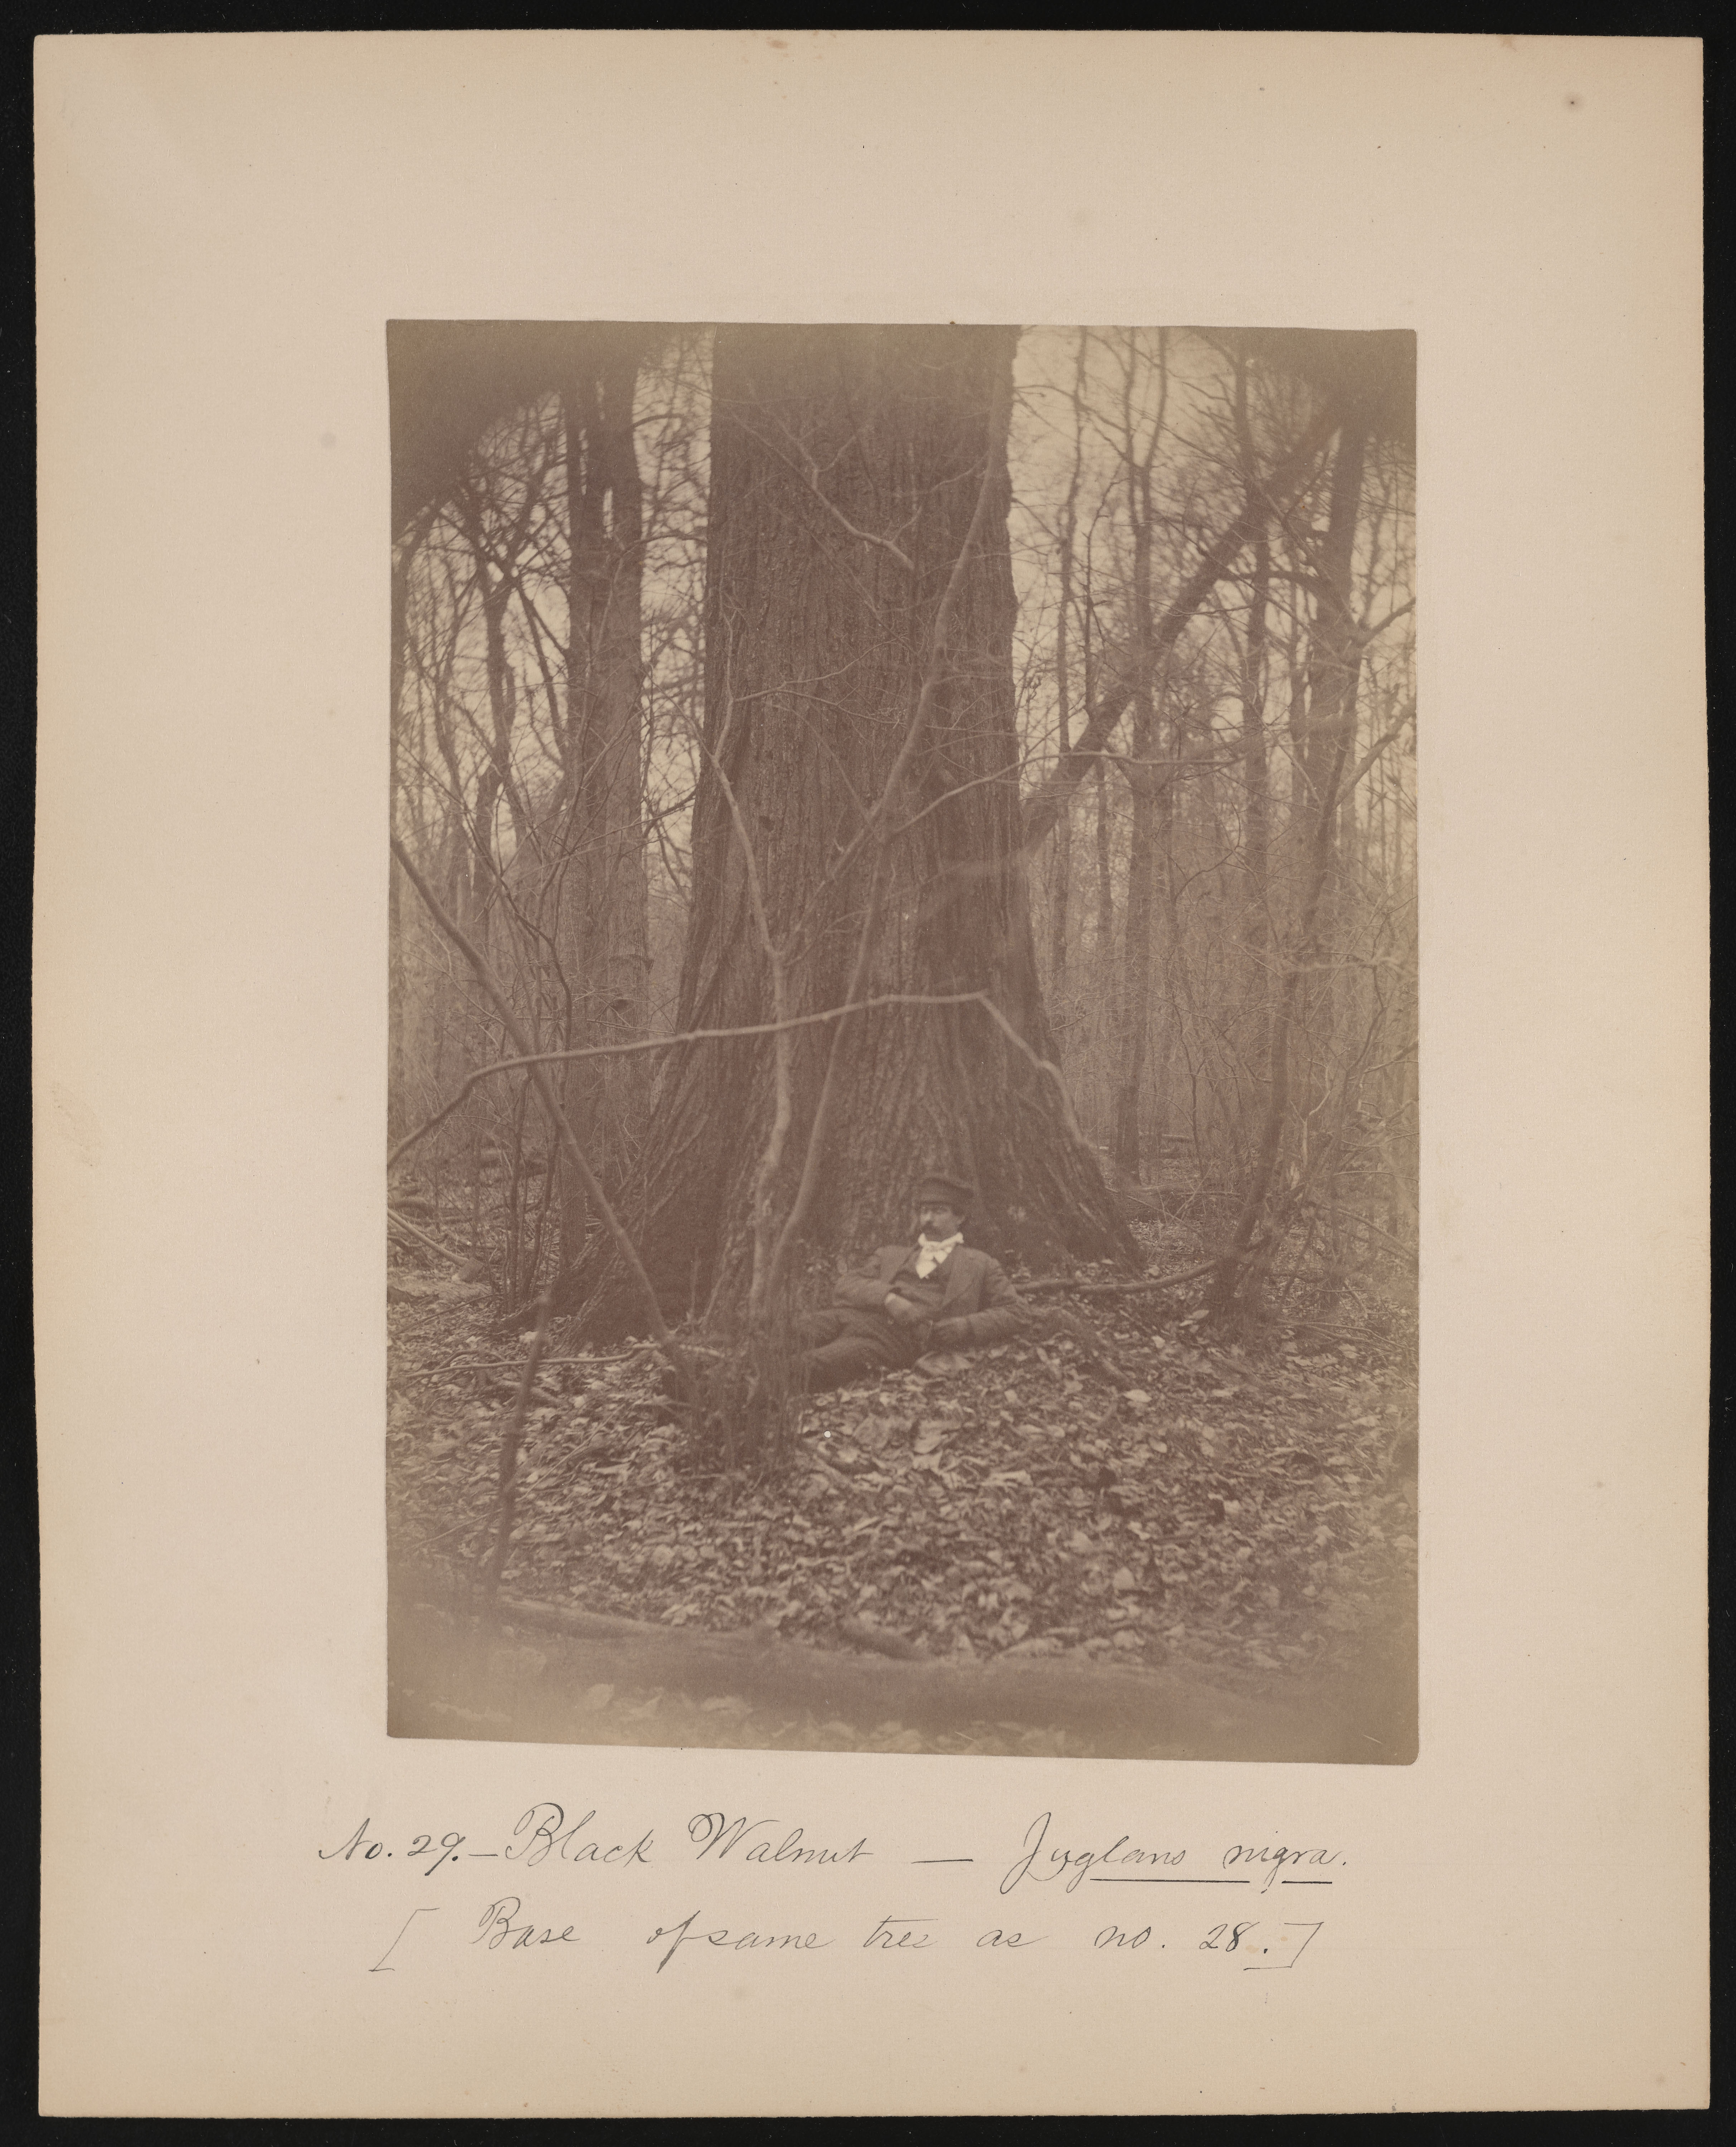 Forest of Mississippi Valley, Black Walnut Tree